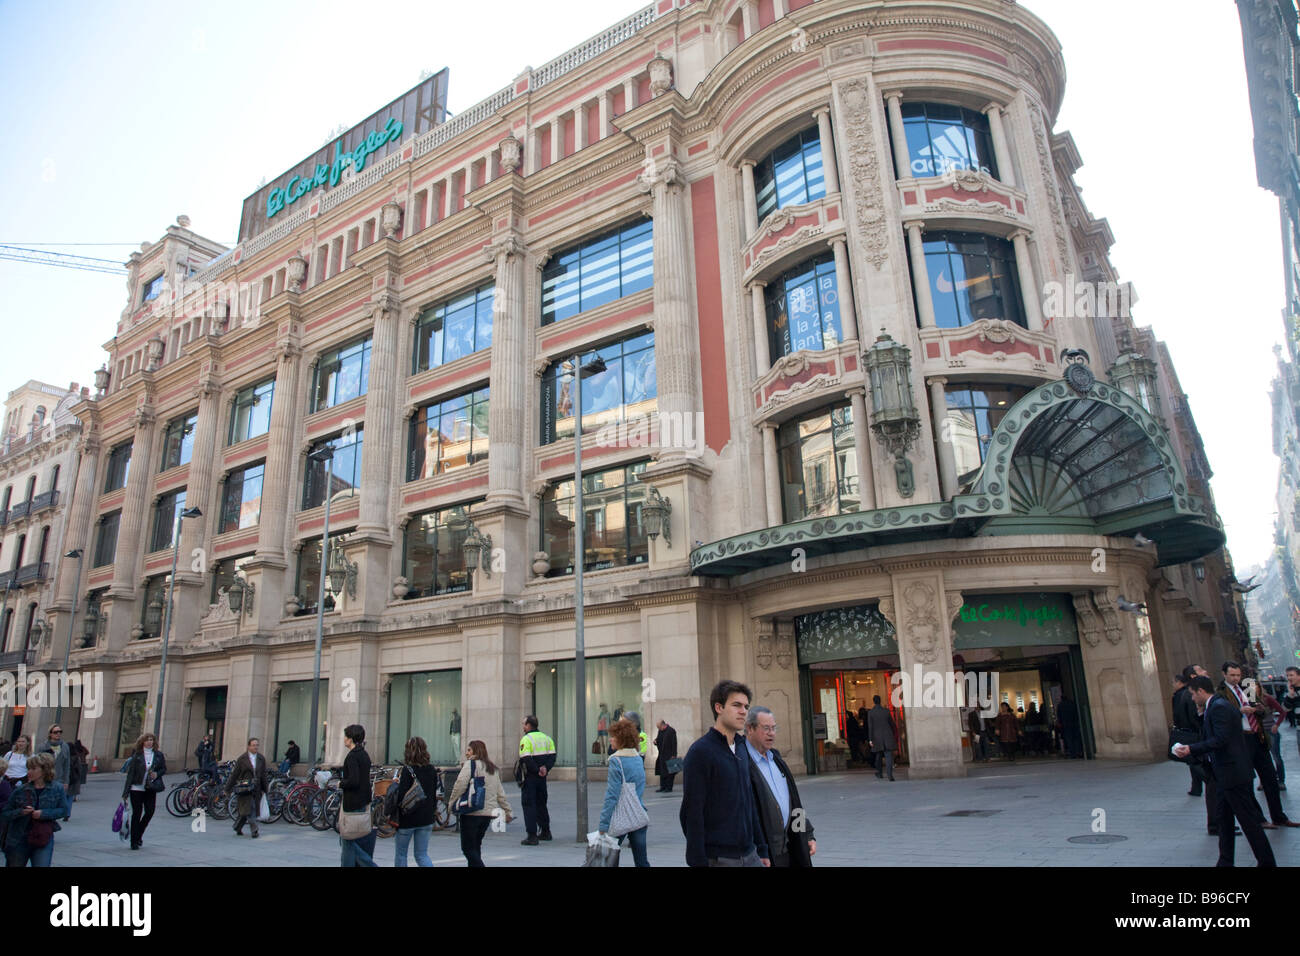 El Corte Ingles, Department Store, Shopping, Barcelona Stock Photo - Alamy